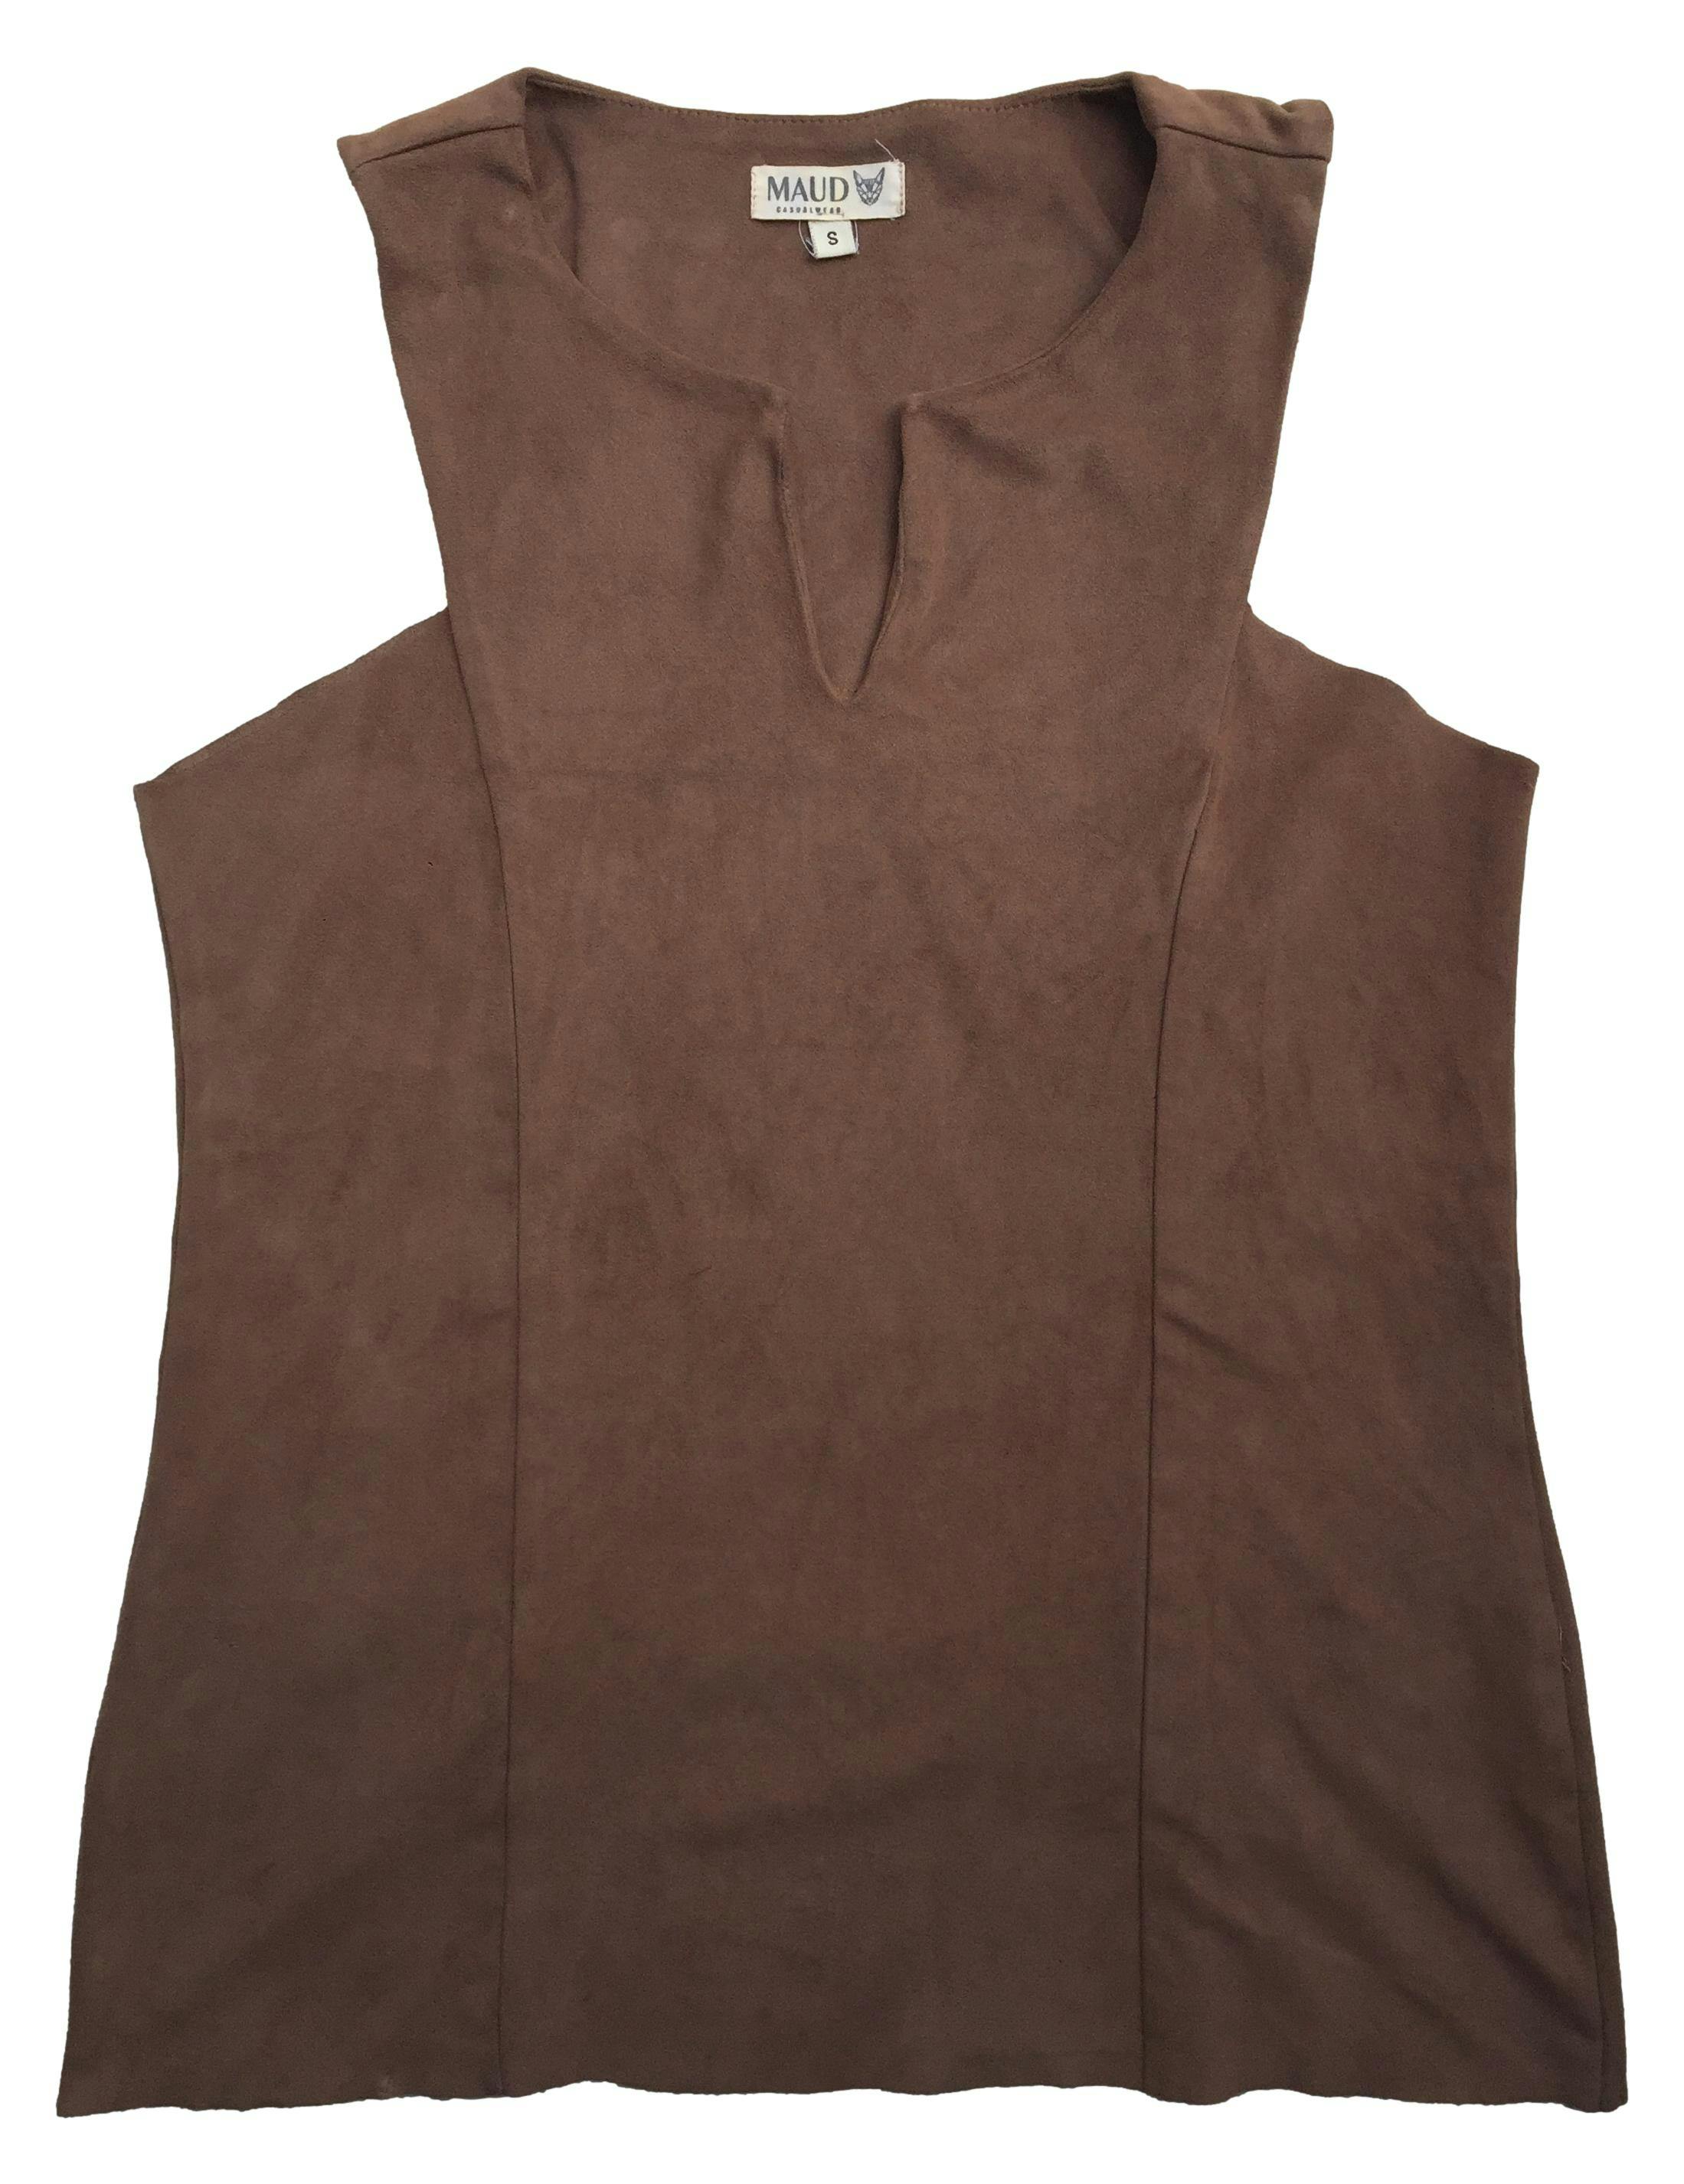 Blusa Maud marrón, tela piel de durazno, manga cero. Busto: 90cm, Largo: 59cm